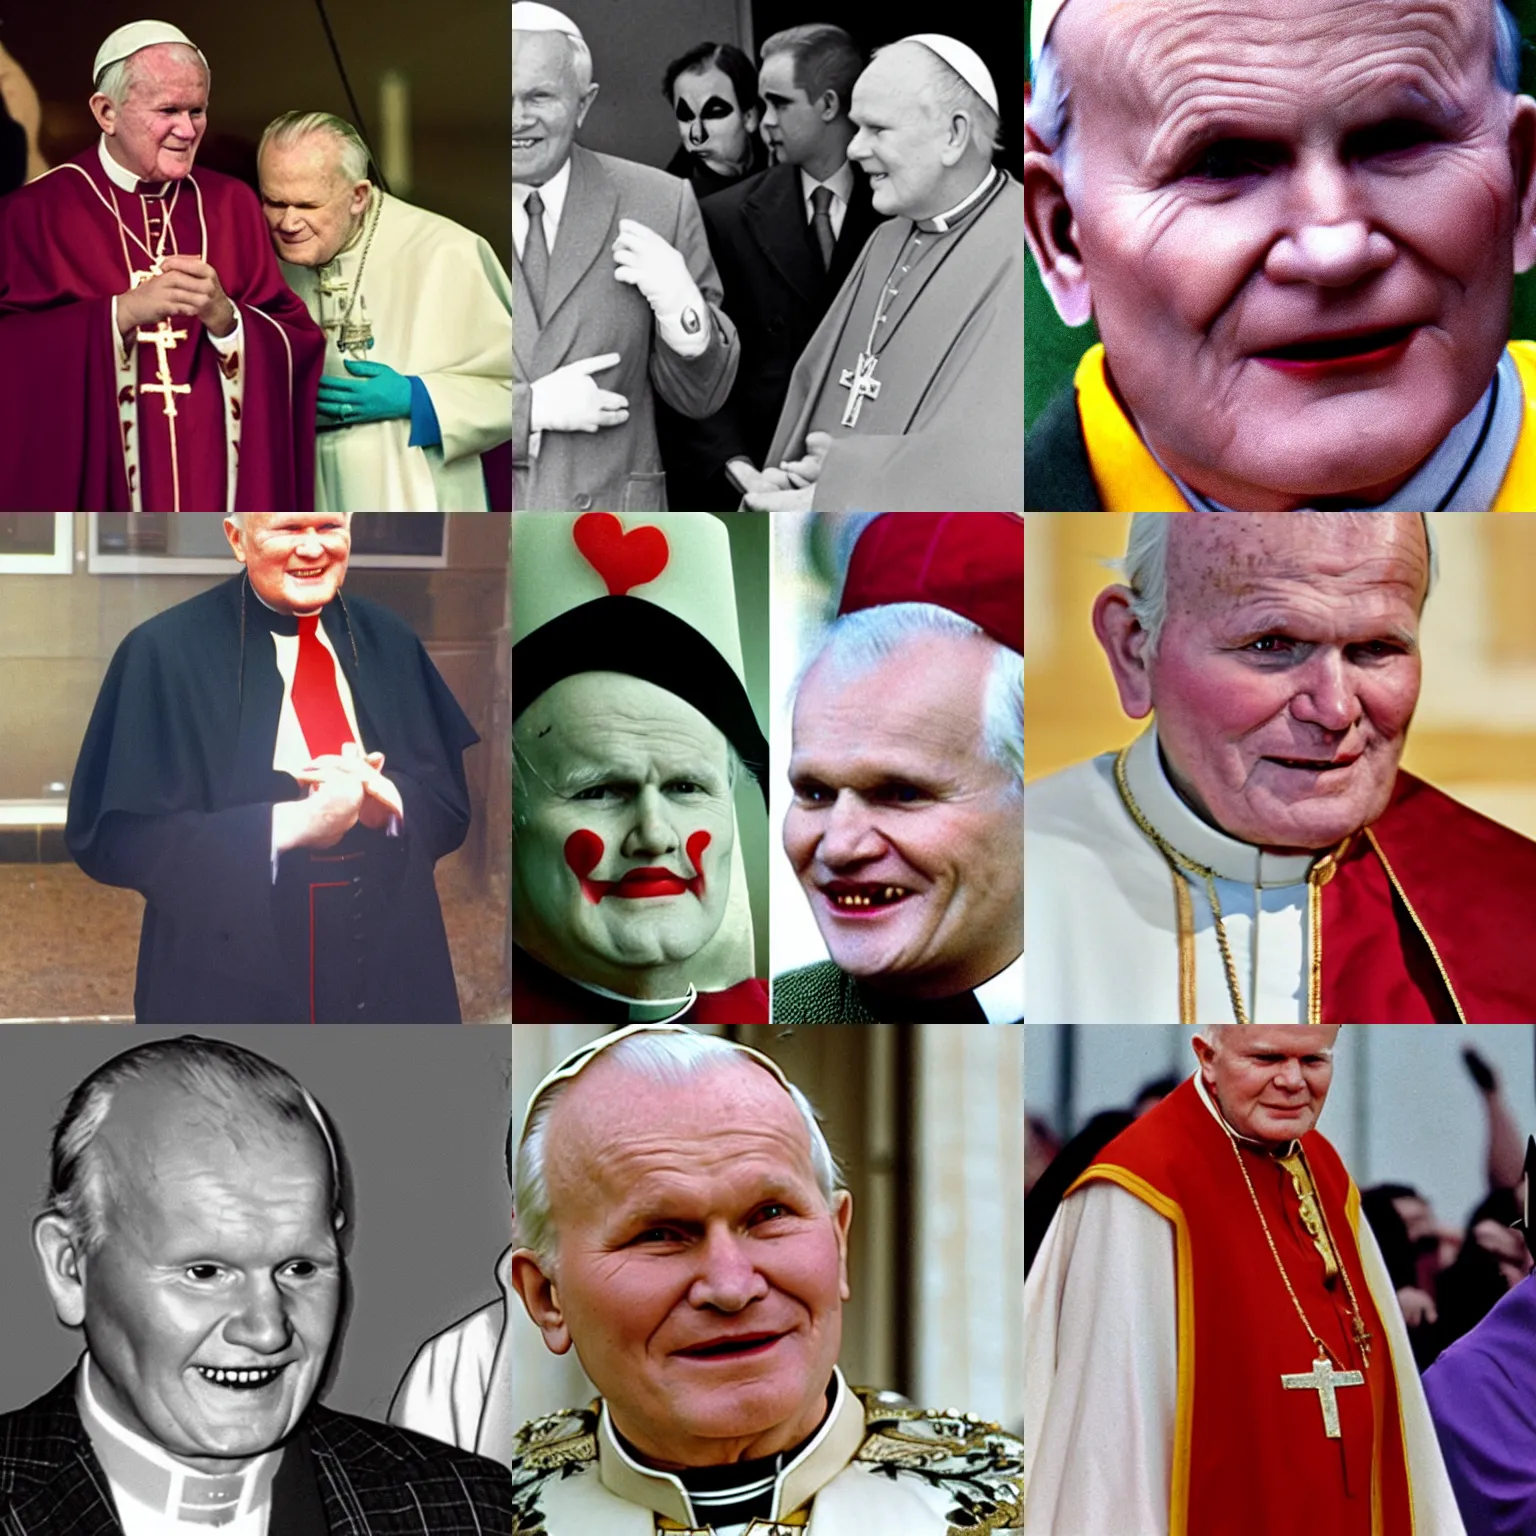 Prompt: John Paul II with Joker make-up